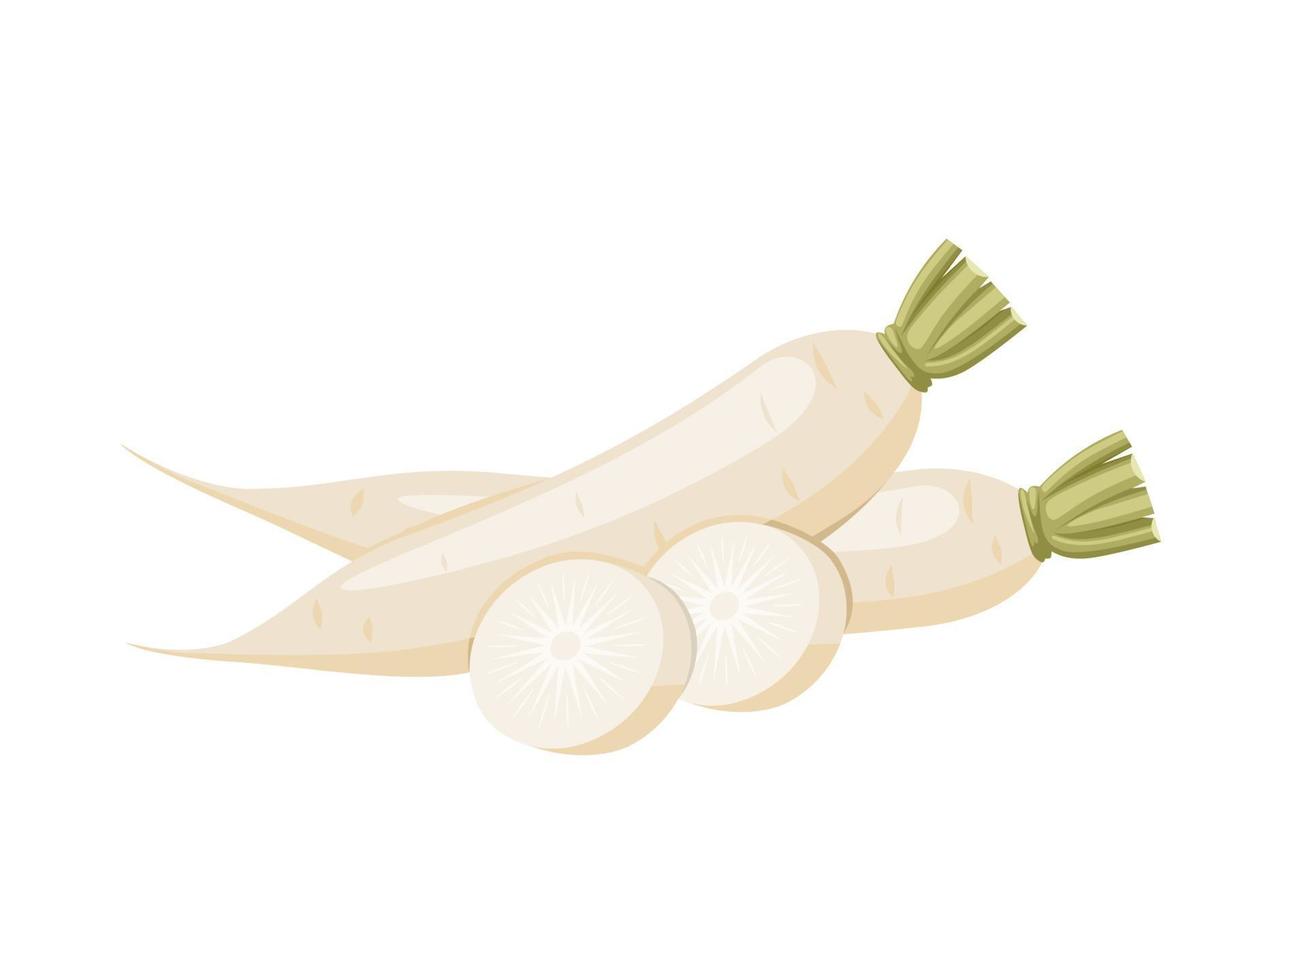 Vector illustration, fresh white radish with slices, isolated on white background.